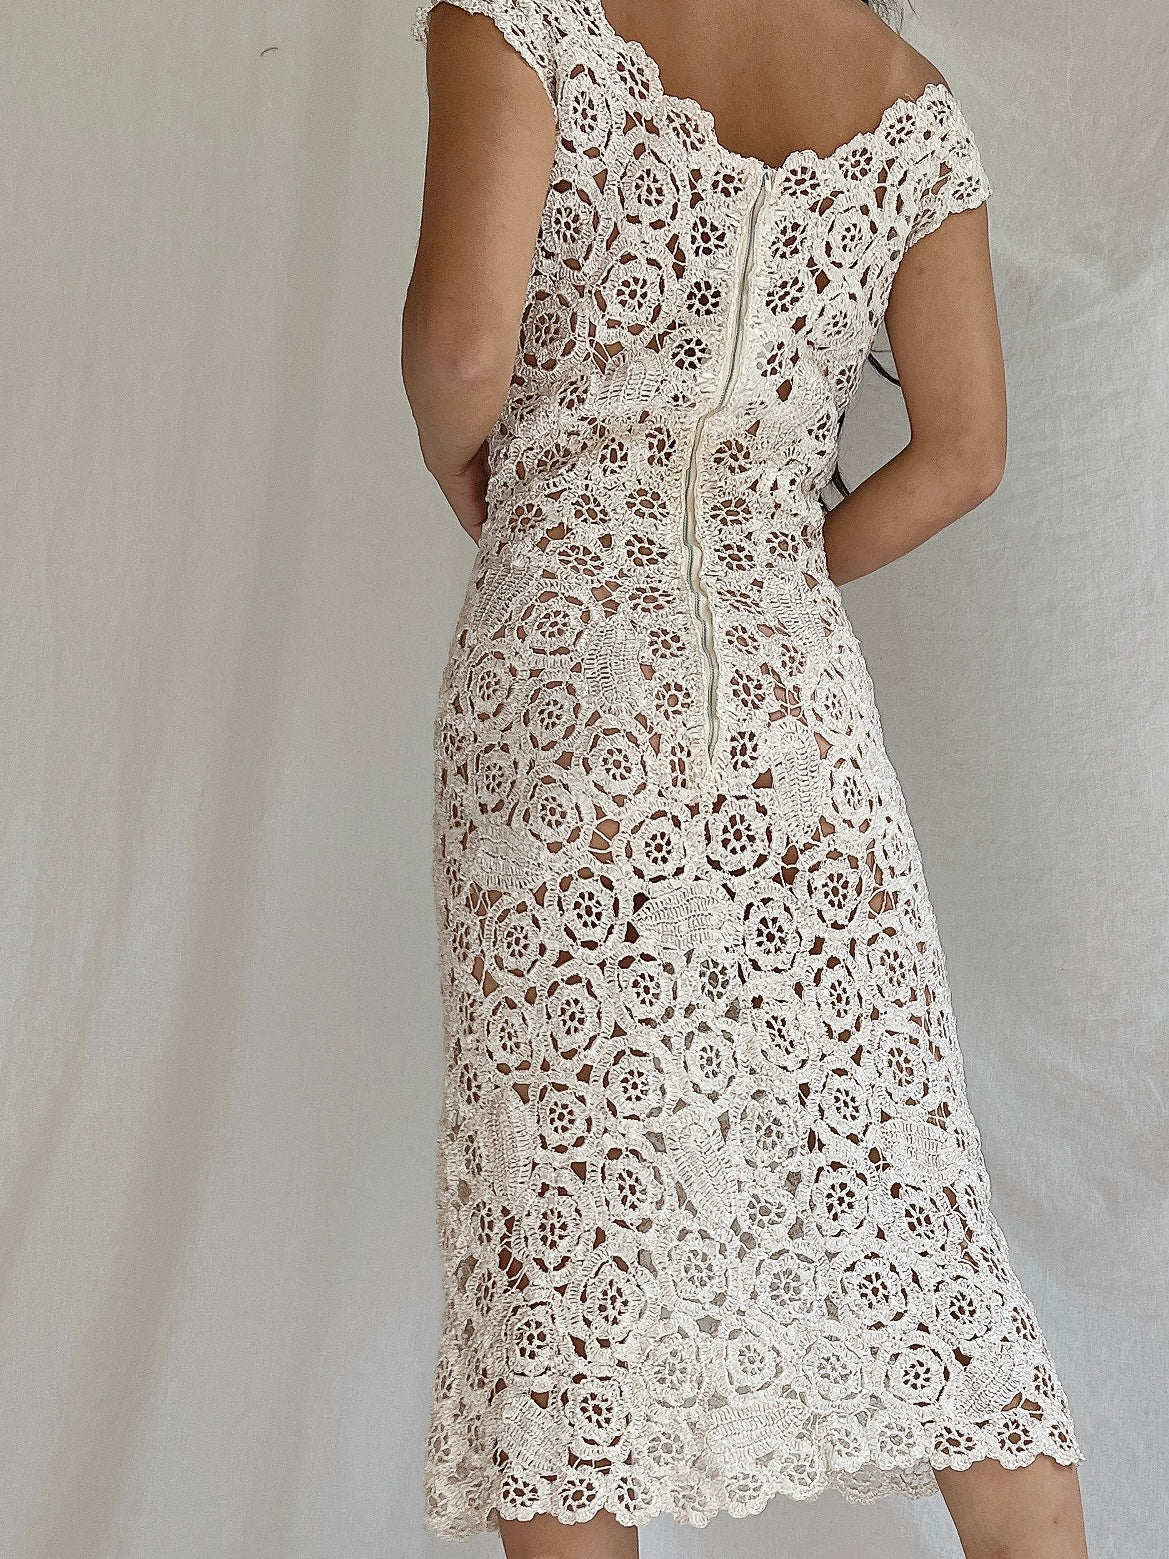 1969s Raffia Crochet Dress - S